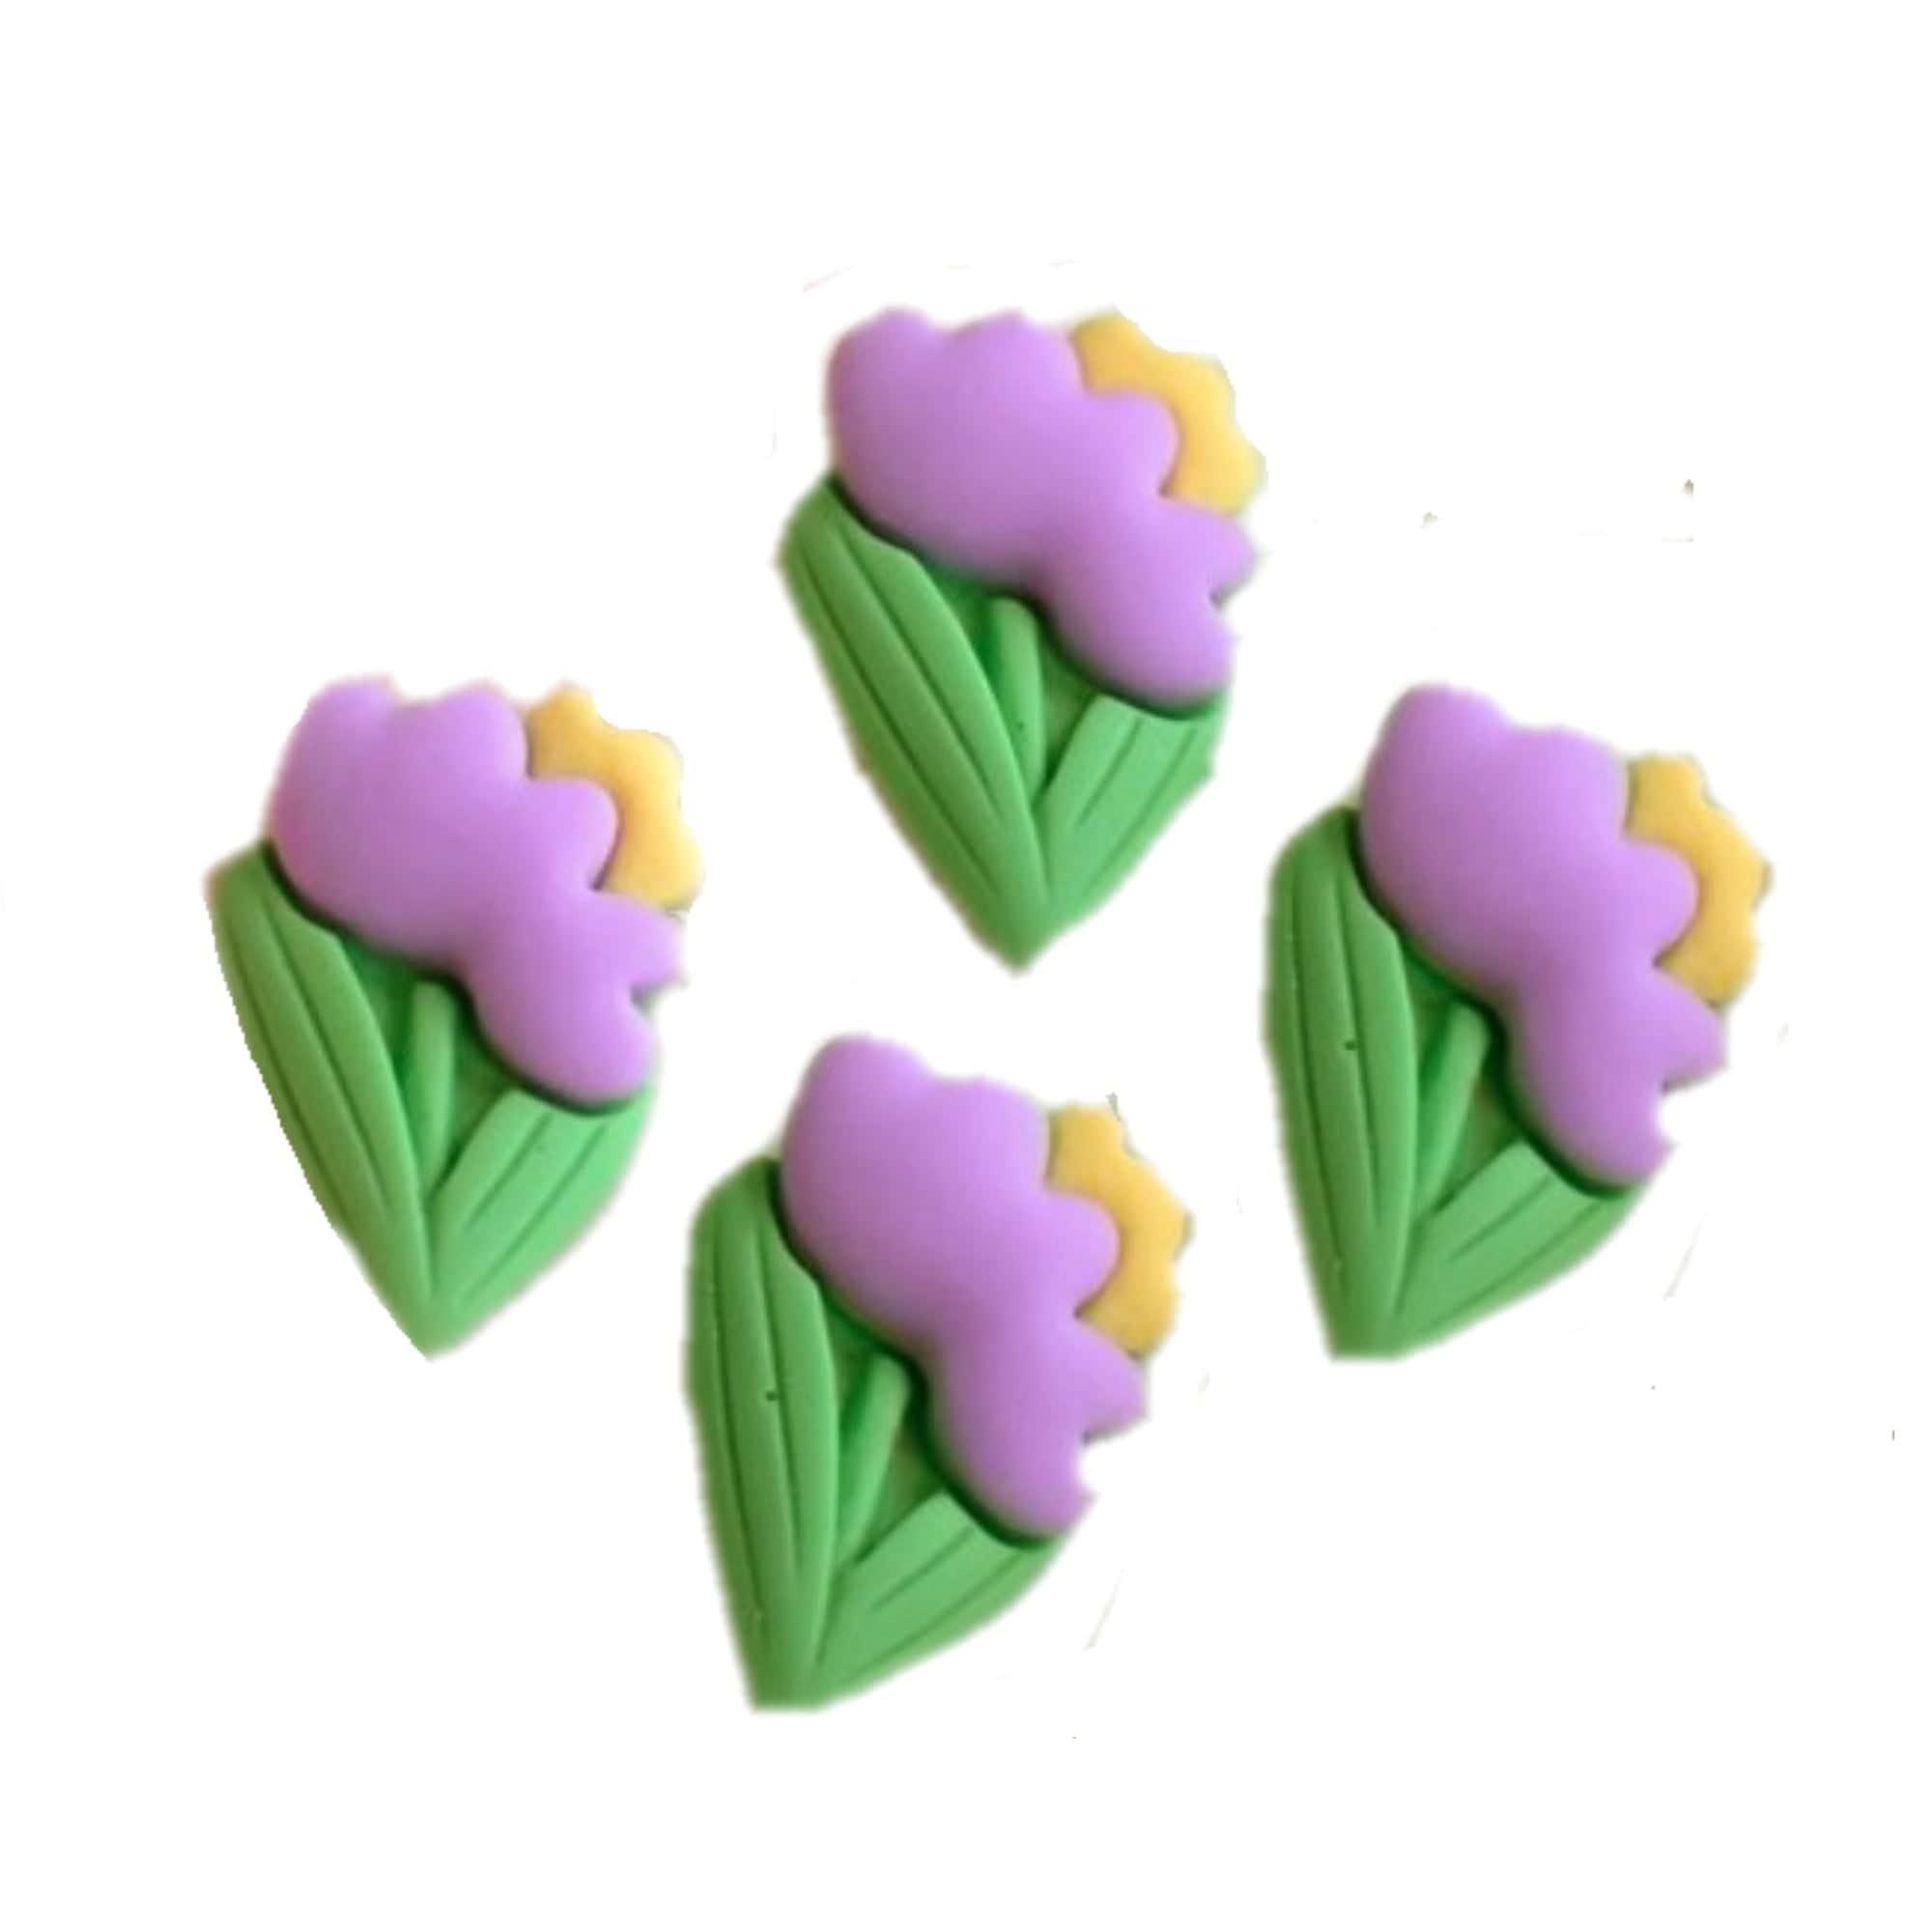 Flower Fun Collection 1" Purple Flower Flatback Scrapbook Buttons by SSC Designs - Pkg. of 4 - Scrapbook Supply Companies